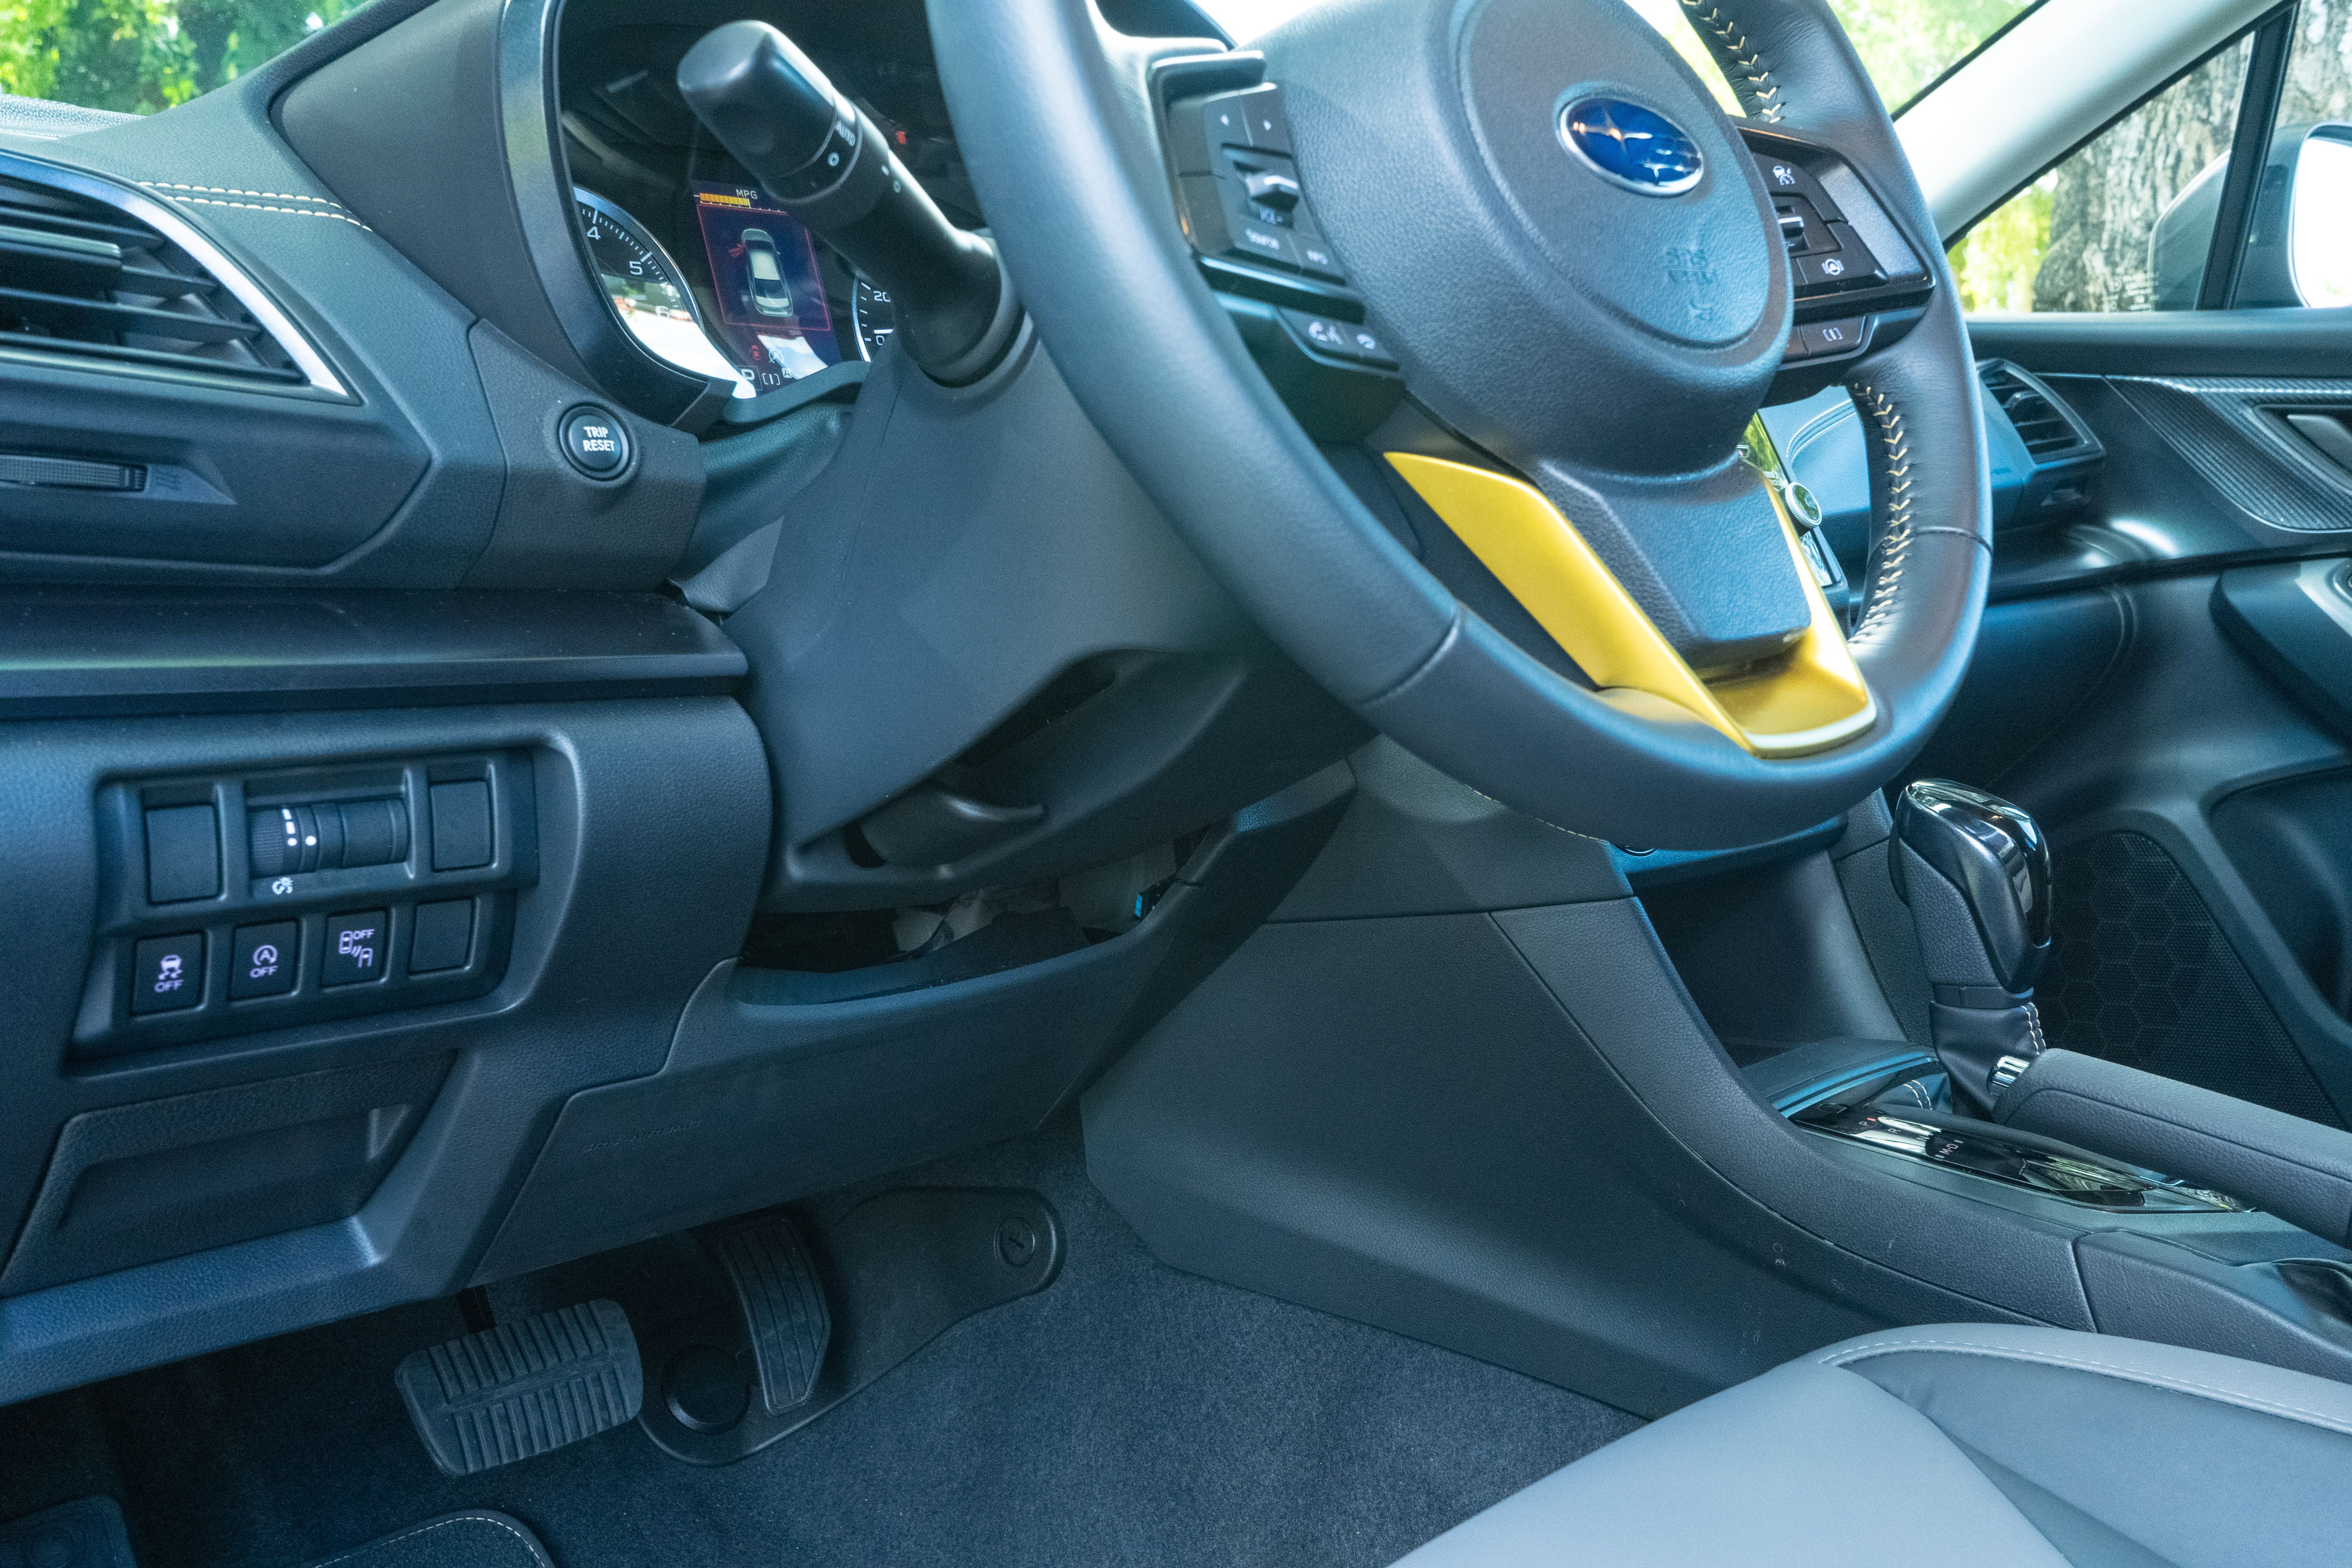 2021 Subaru Crosstrek Sport - Driven